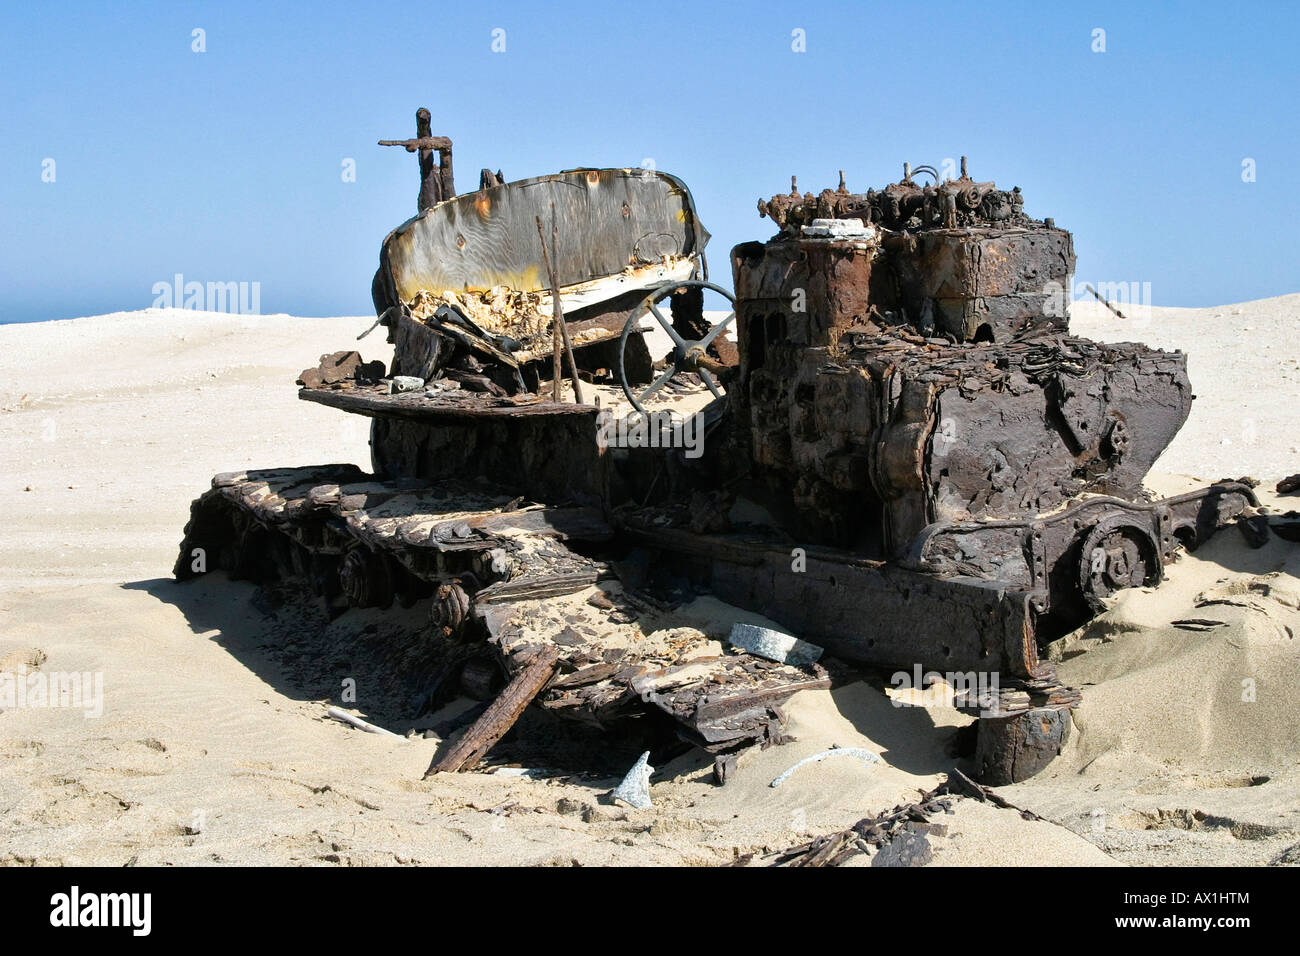 Old strong rusted track vehicle, diamond prohibited area, Saddlehill, Atlantic Ocean, Namibia, Africa Stock Photo